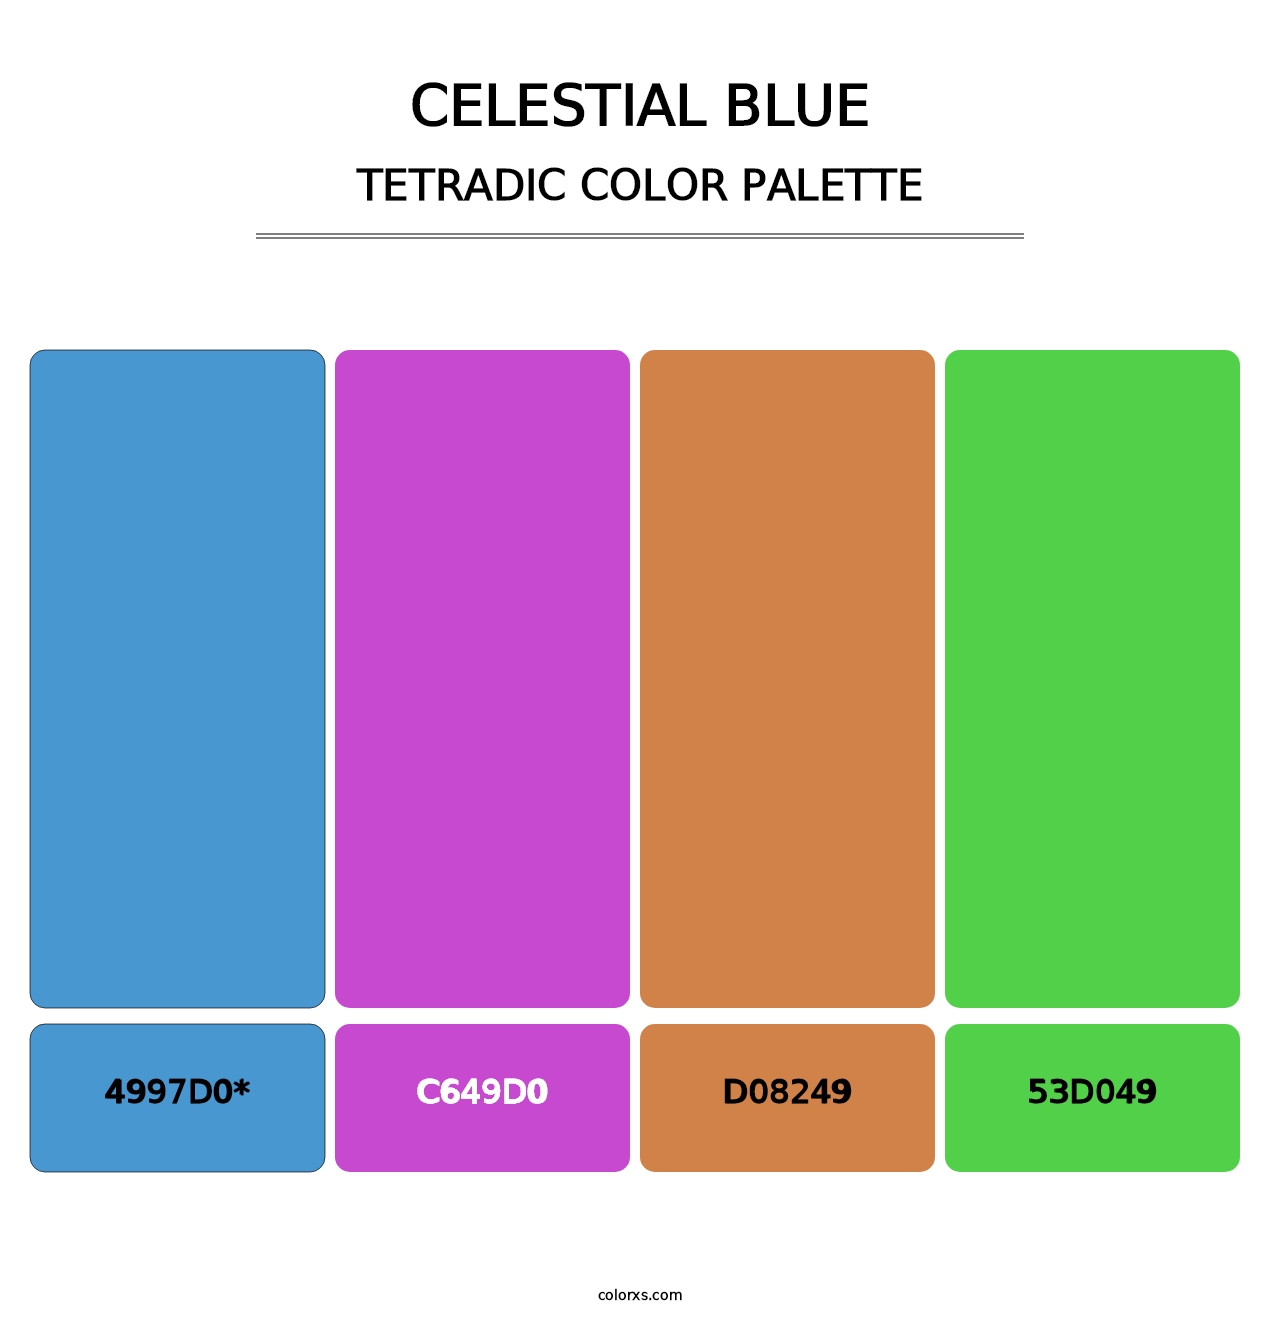 Celestial Blue - Tetradic Color Palette